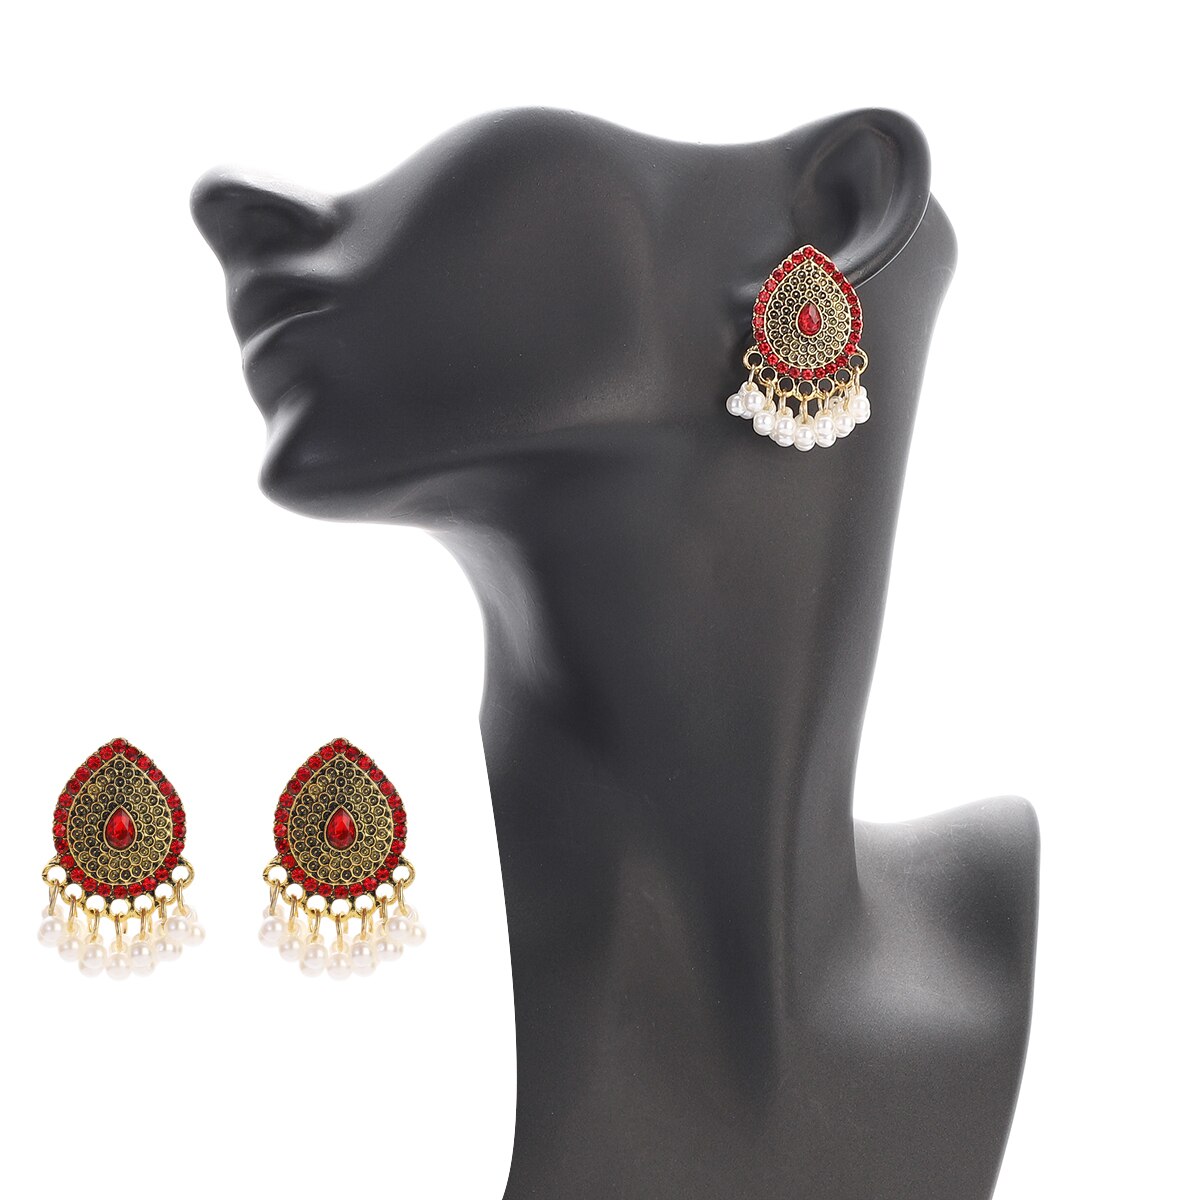 Luxury-White-CZ-Water-Drop-Earrings-For-Women-Ethnic-Vintage-Bohemian-Gold-Color-Statement-Earrings-1005004700736114-8